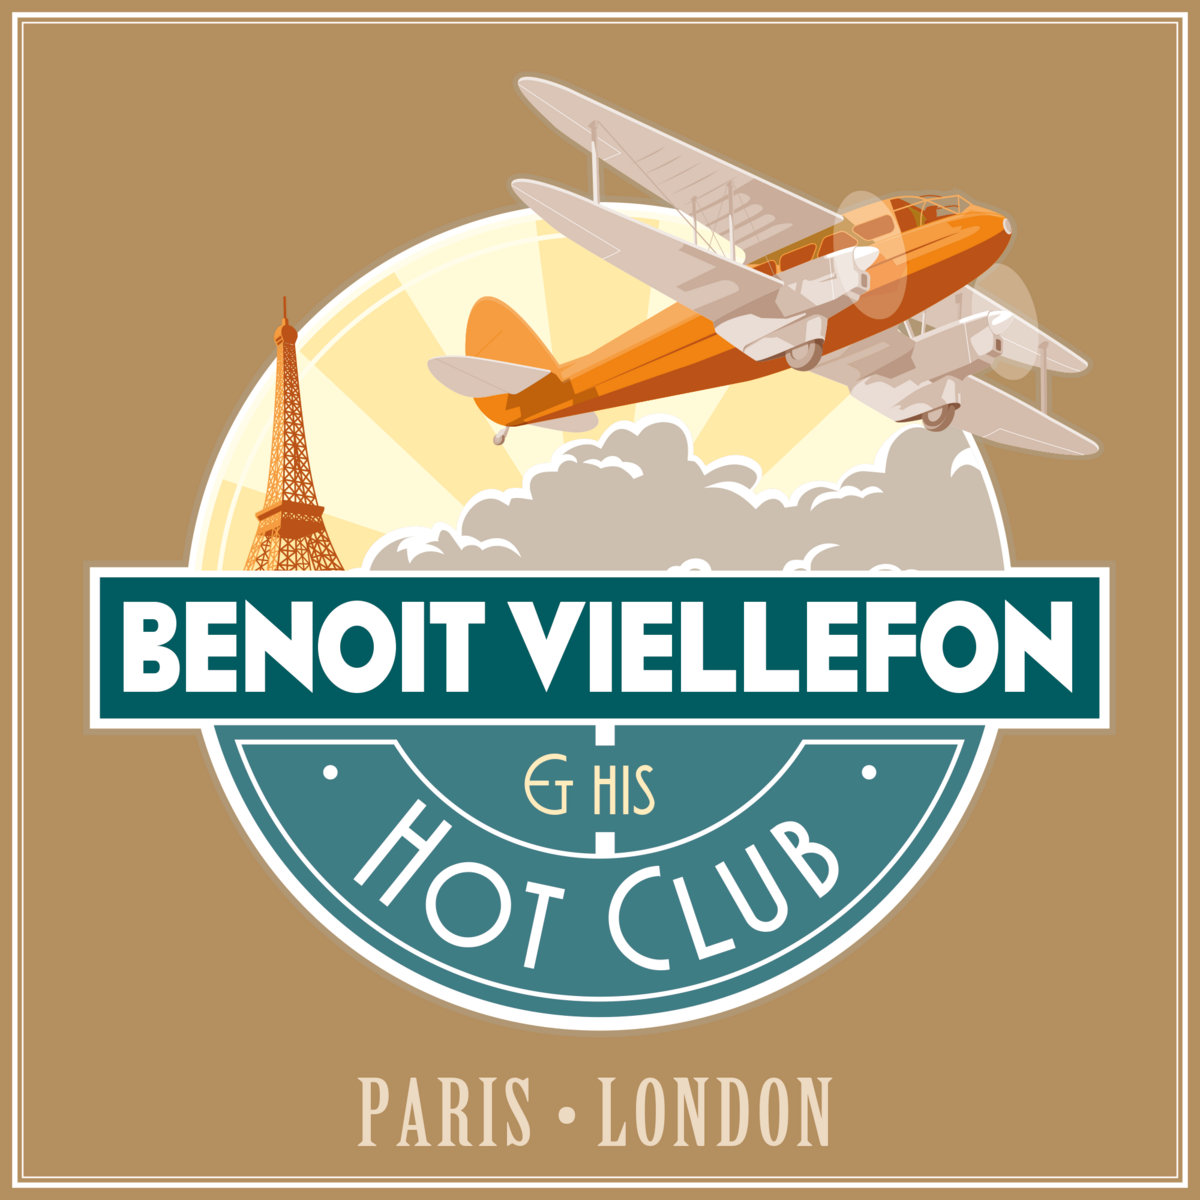 Benoit Viellefon Hot Club - Paris London - Album available on Bandcamp